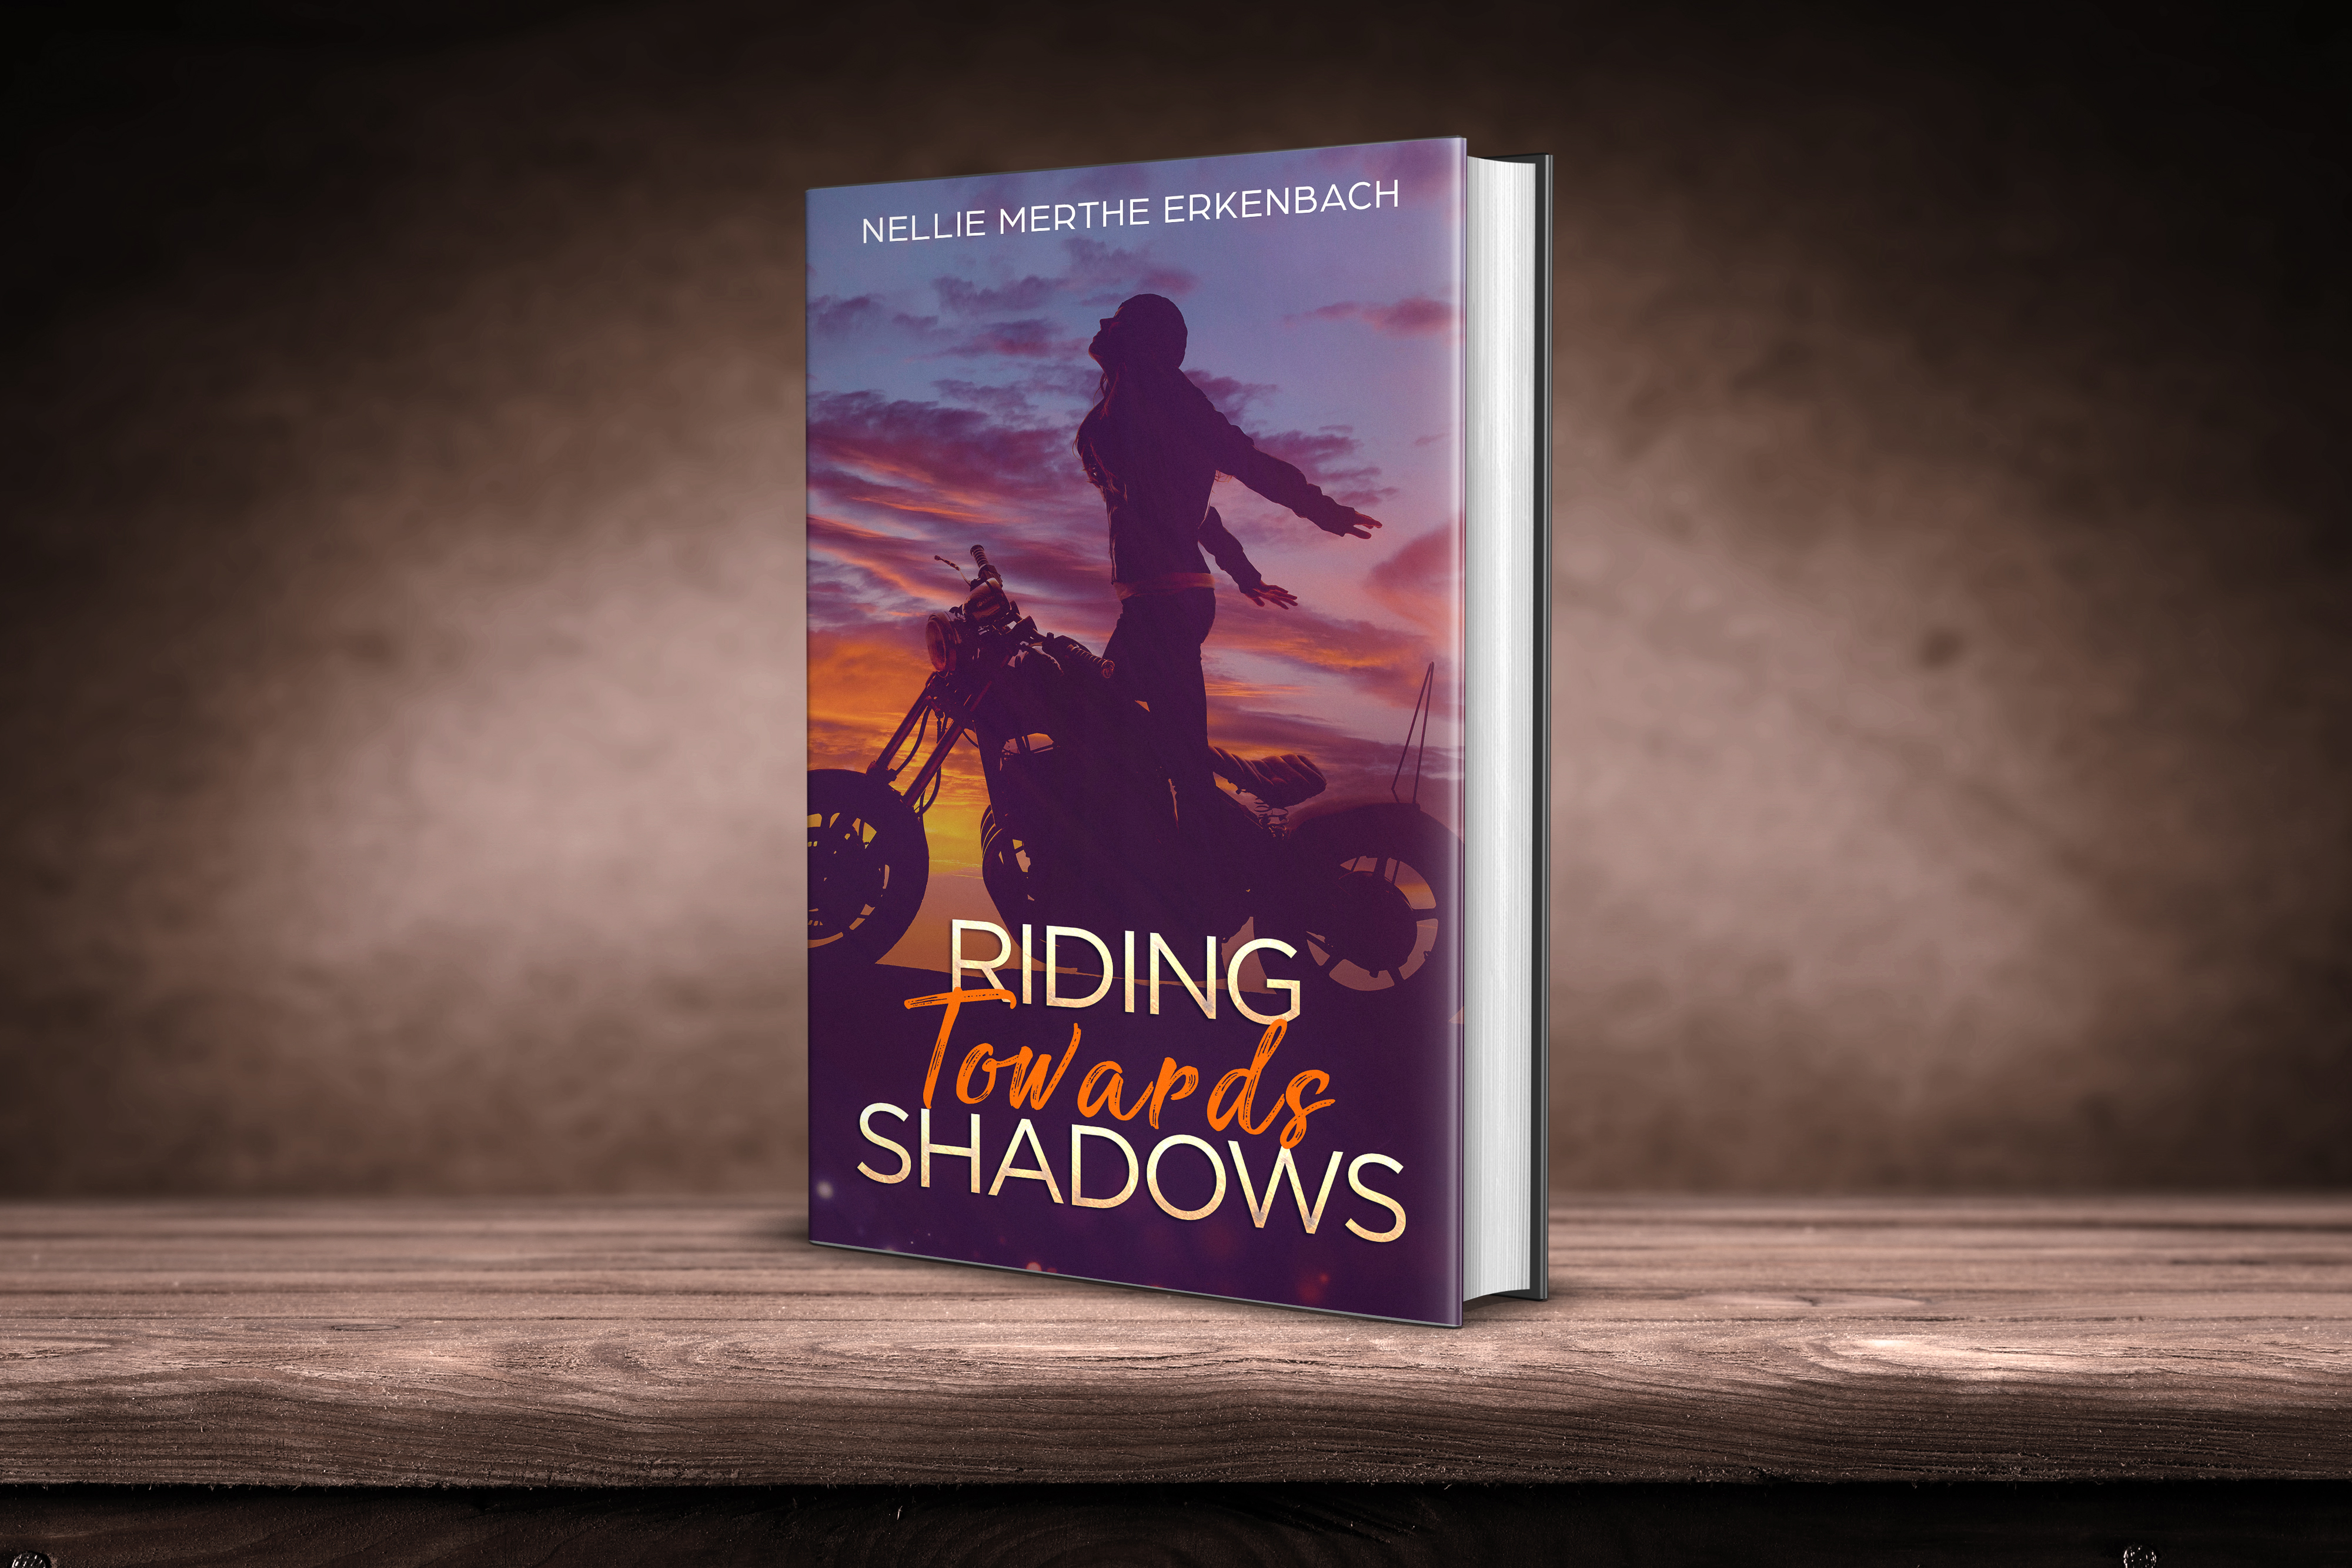 Riding Towrads Shadows by Nellie Merthe Erkenbach